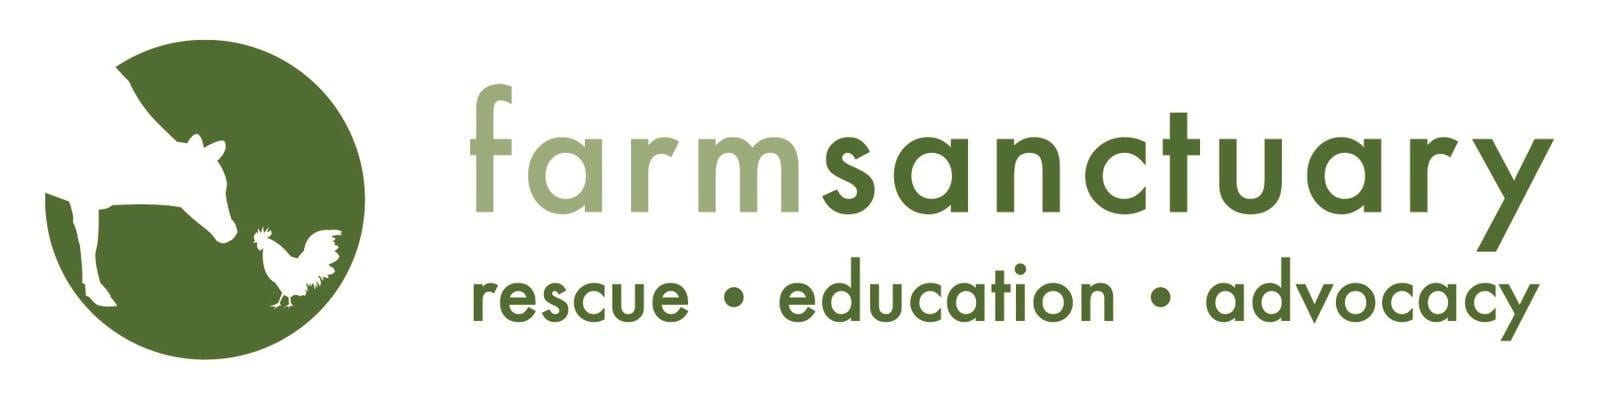 Farm Sanctuary Logo - FARM SANCTUARY logo - Yapacopia